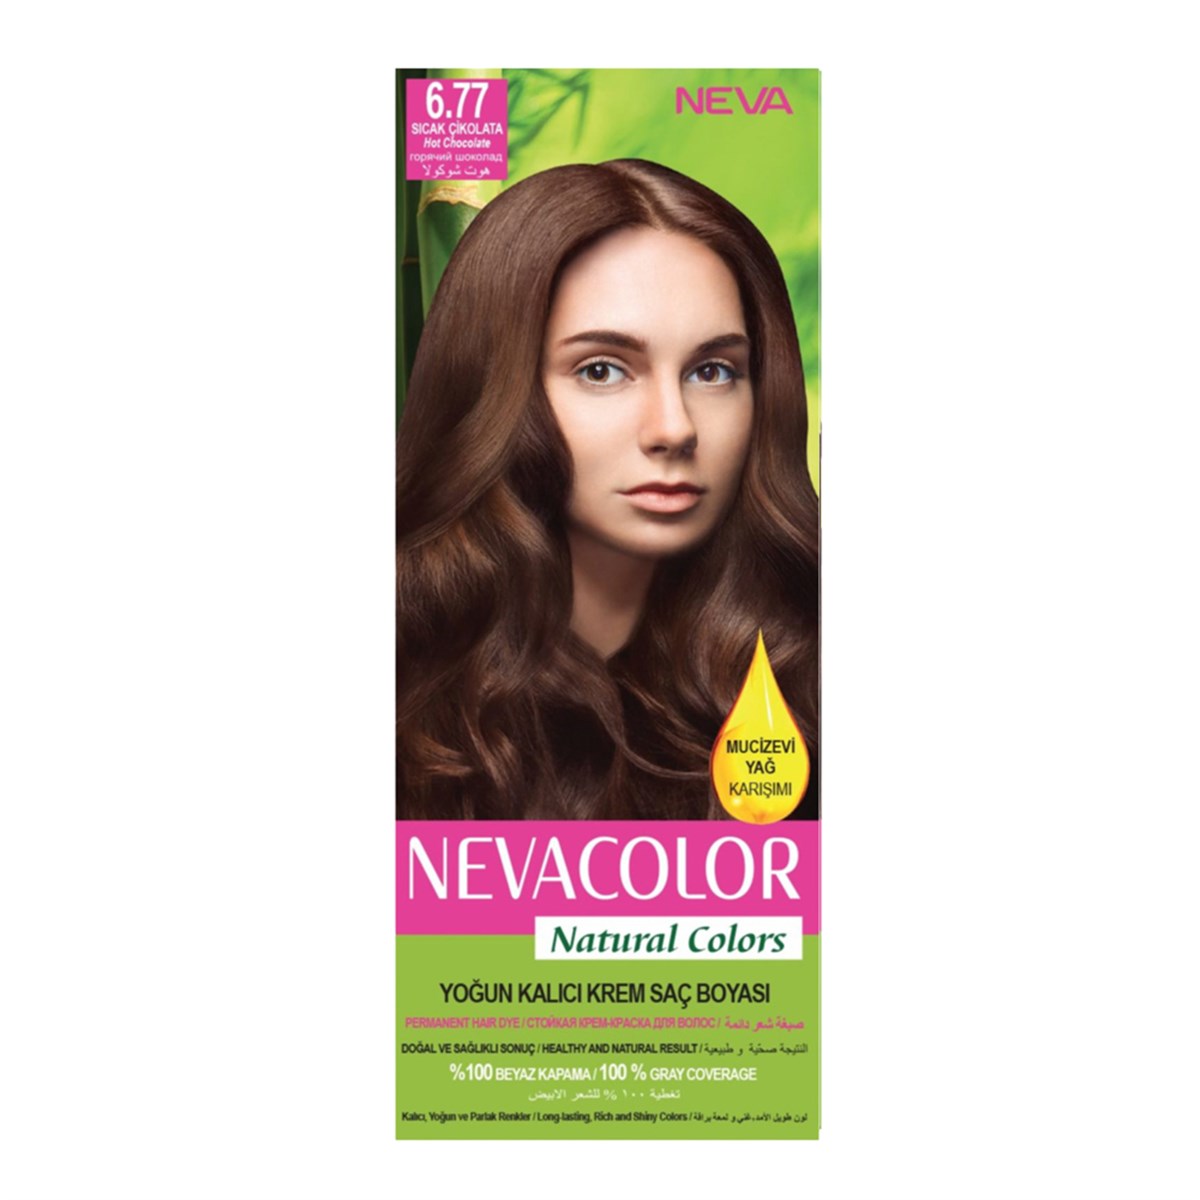 Nevacolor Natural Colors Set Boya Sıcak Çikolata 6.77 - Platin